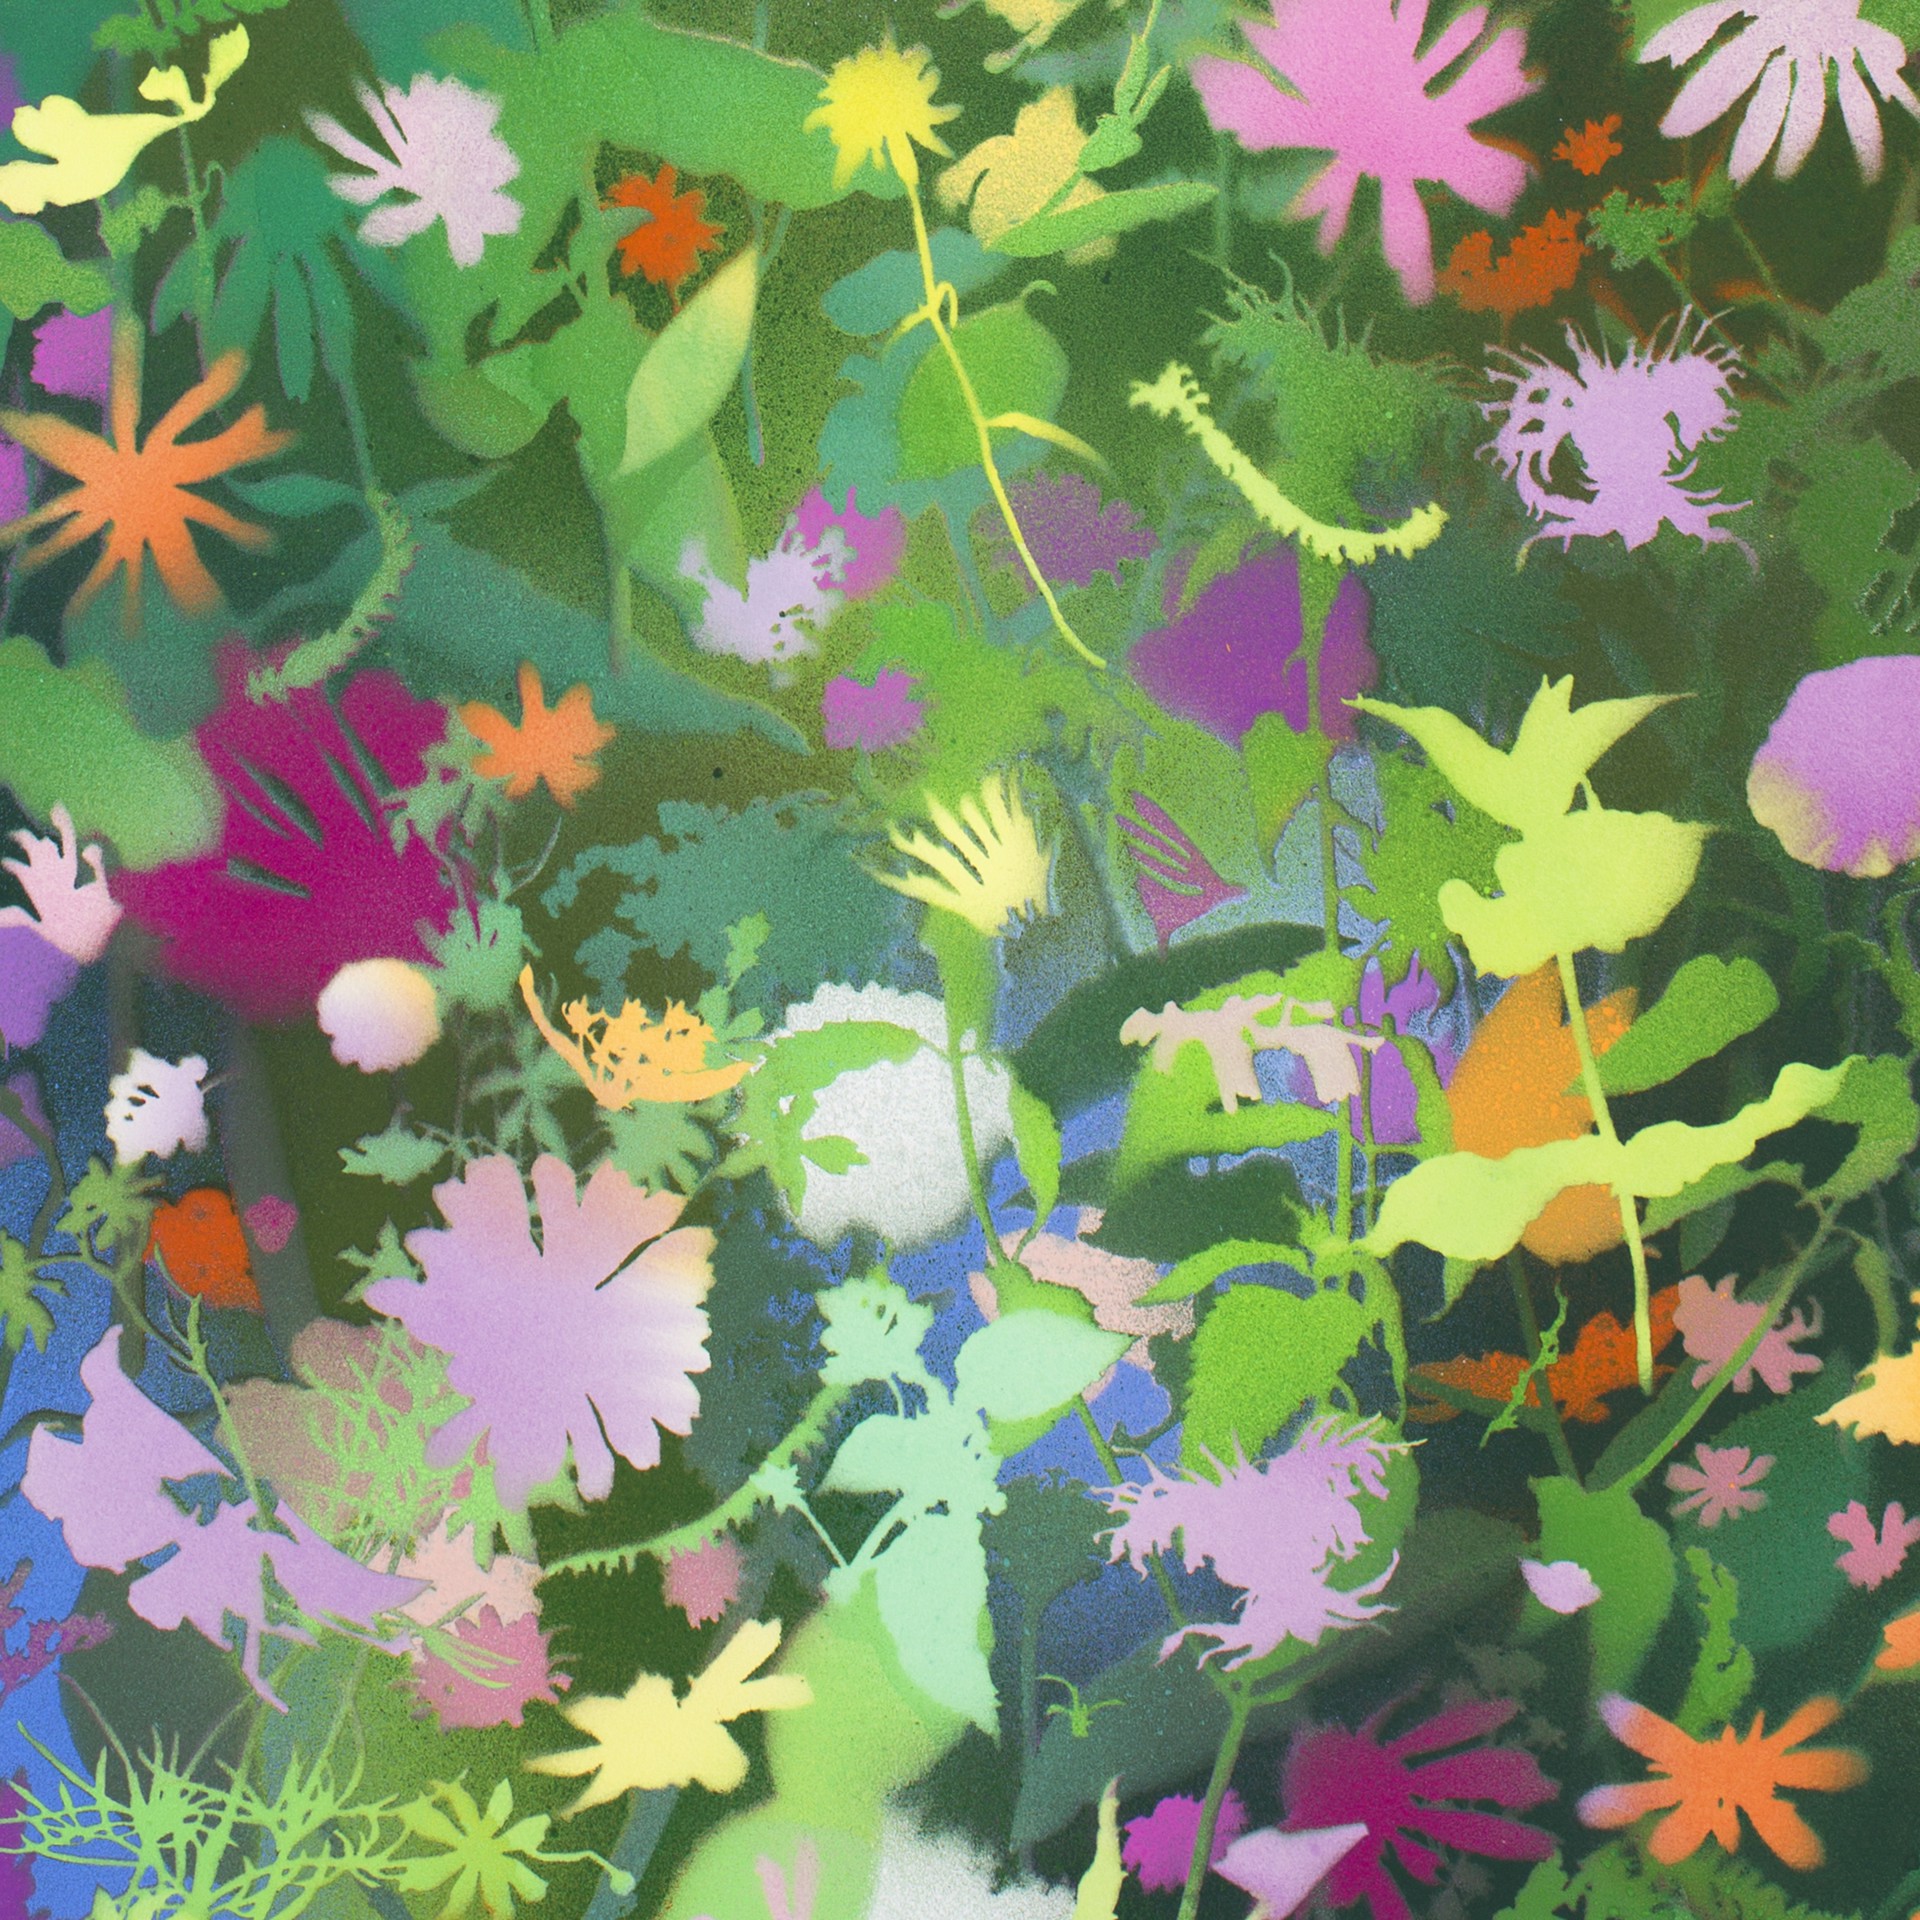 August Wildflowers II by Carlyle Wolfe Lee